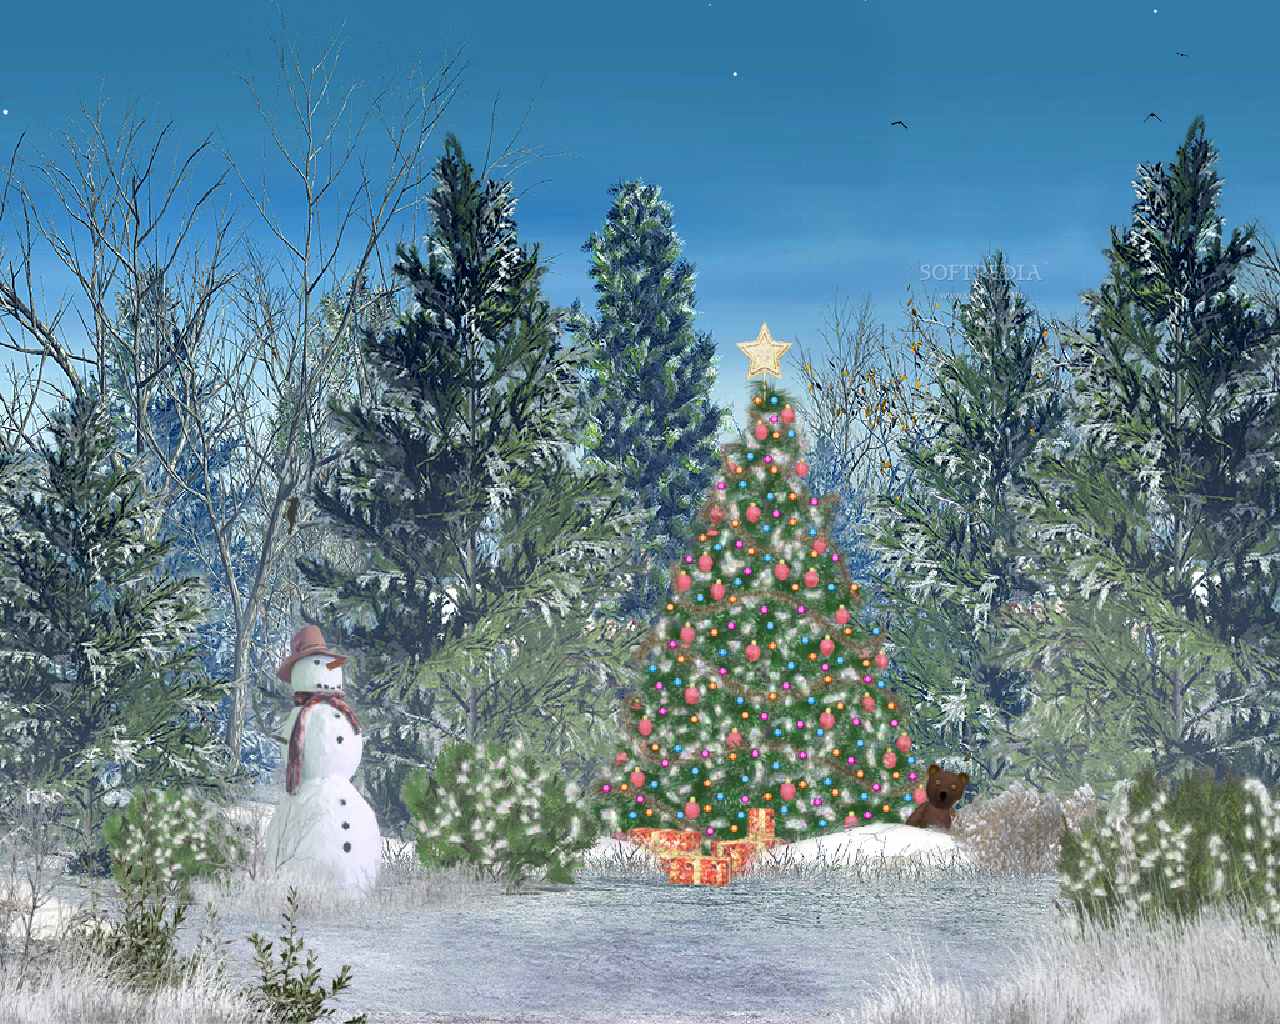 Поздравляю С Новым Годом ! http://www.softpedia.com/screenshots/Christmas-Forest-Animated-Screensaver_1.jpg